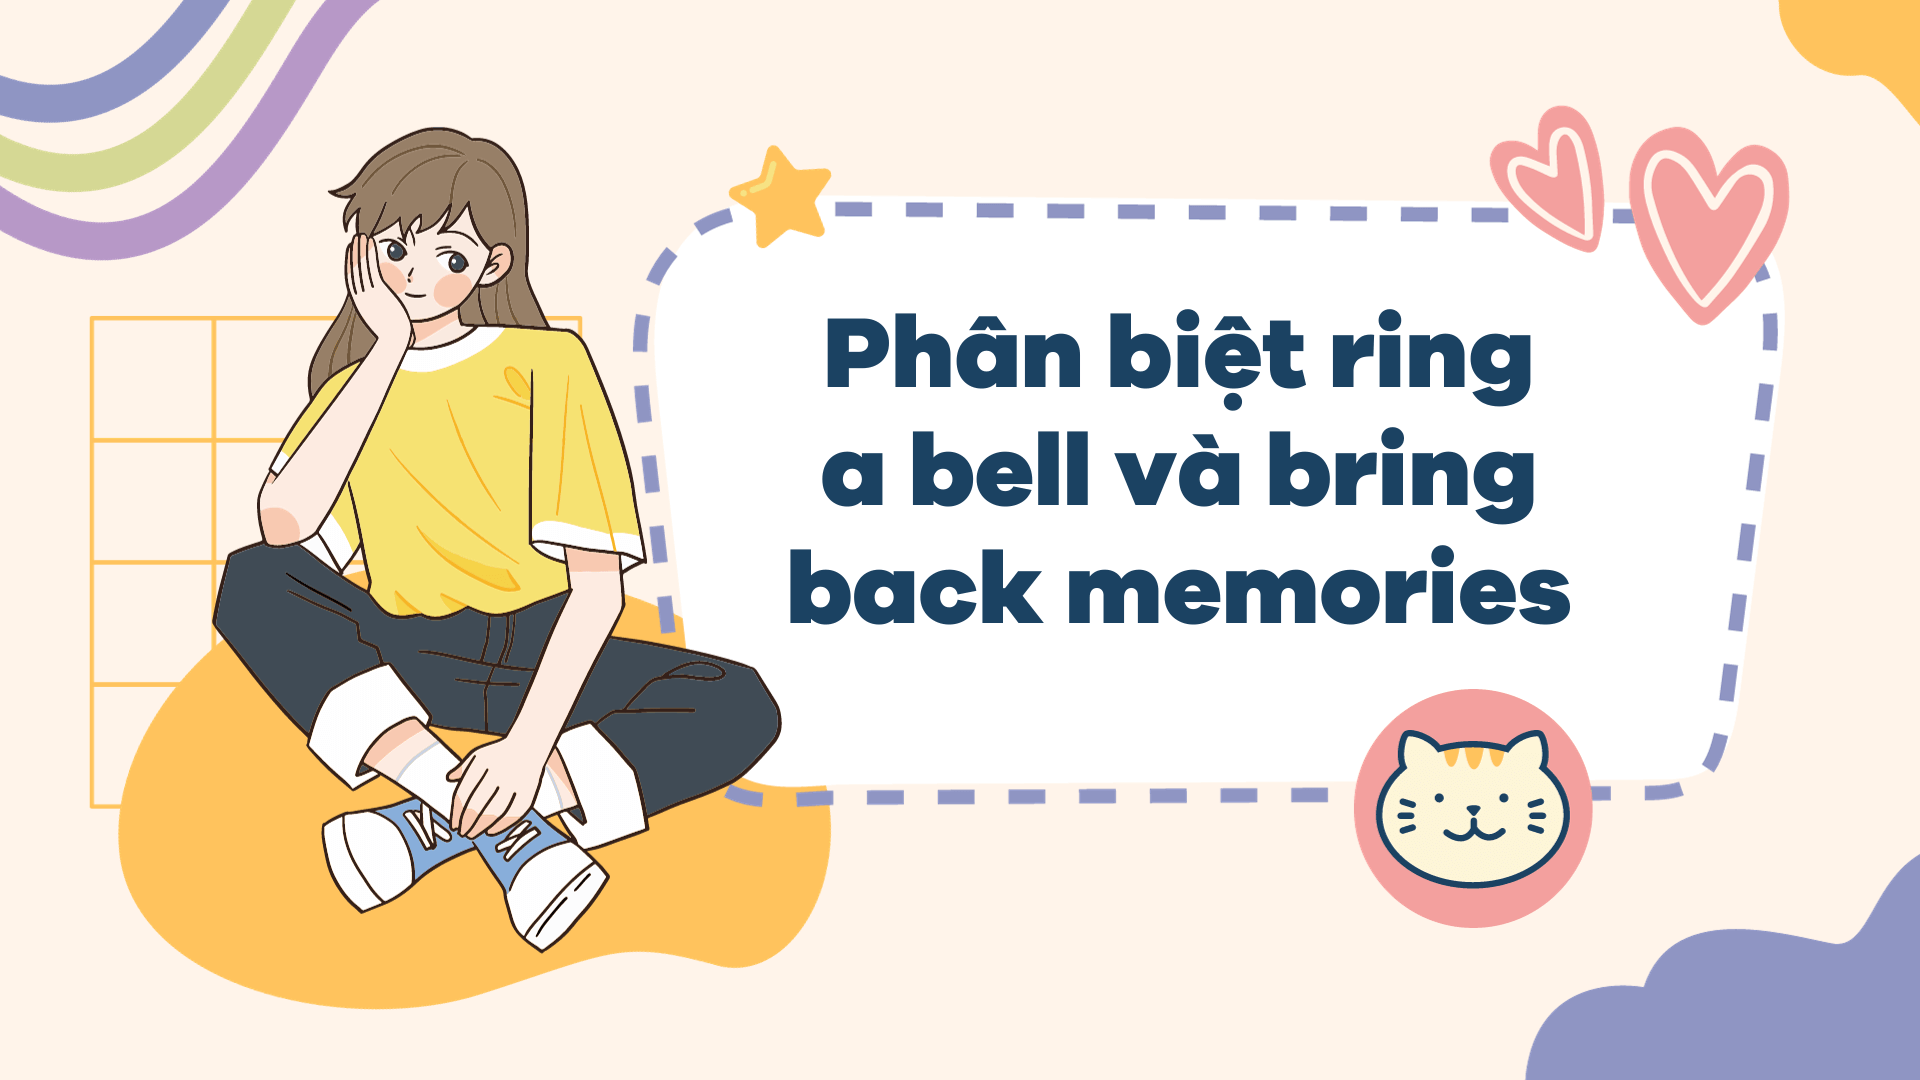 Phan biet ring a bell va bring back memories